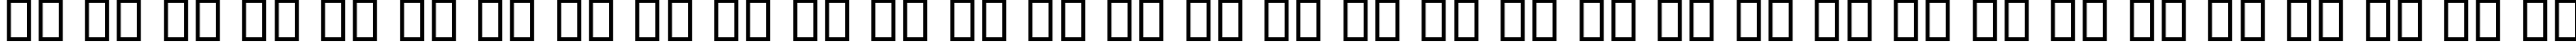 Пример написания русского алфавита шрифтом B Zar Bold